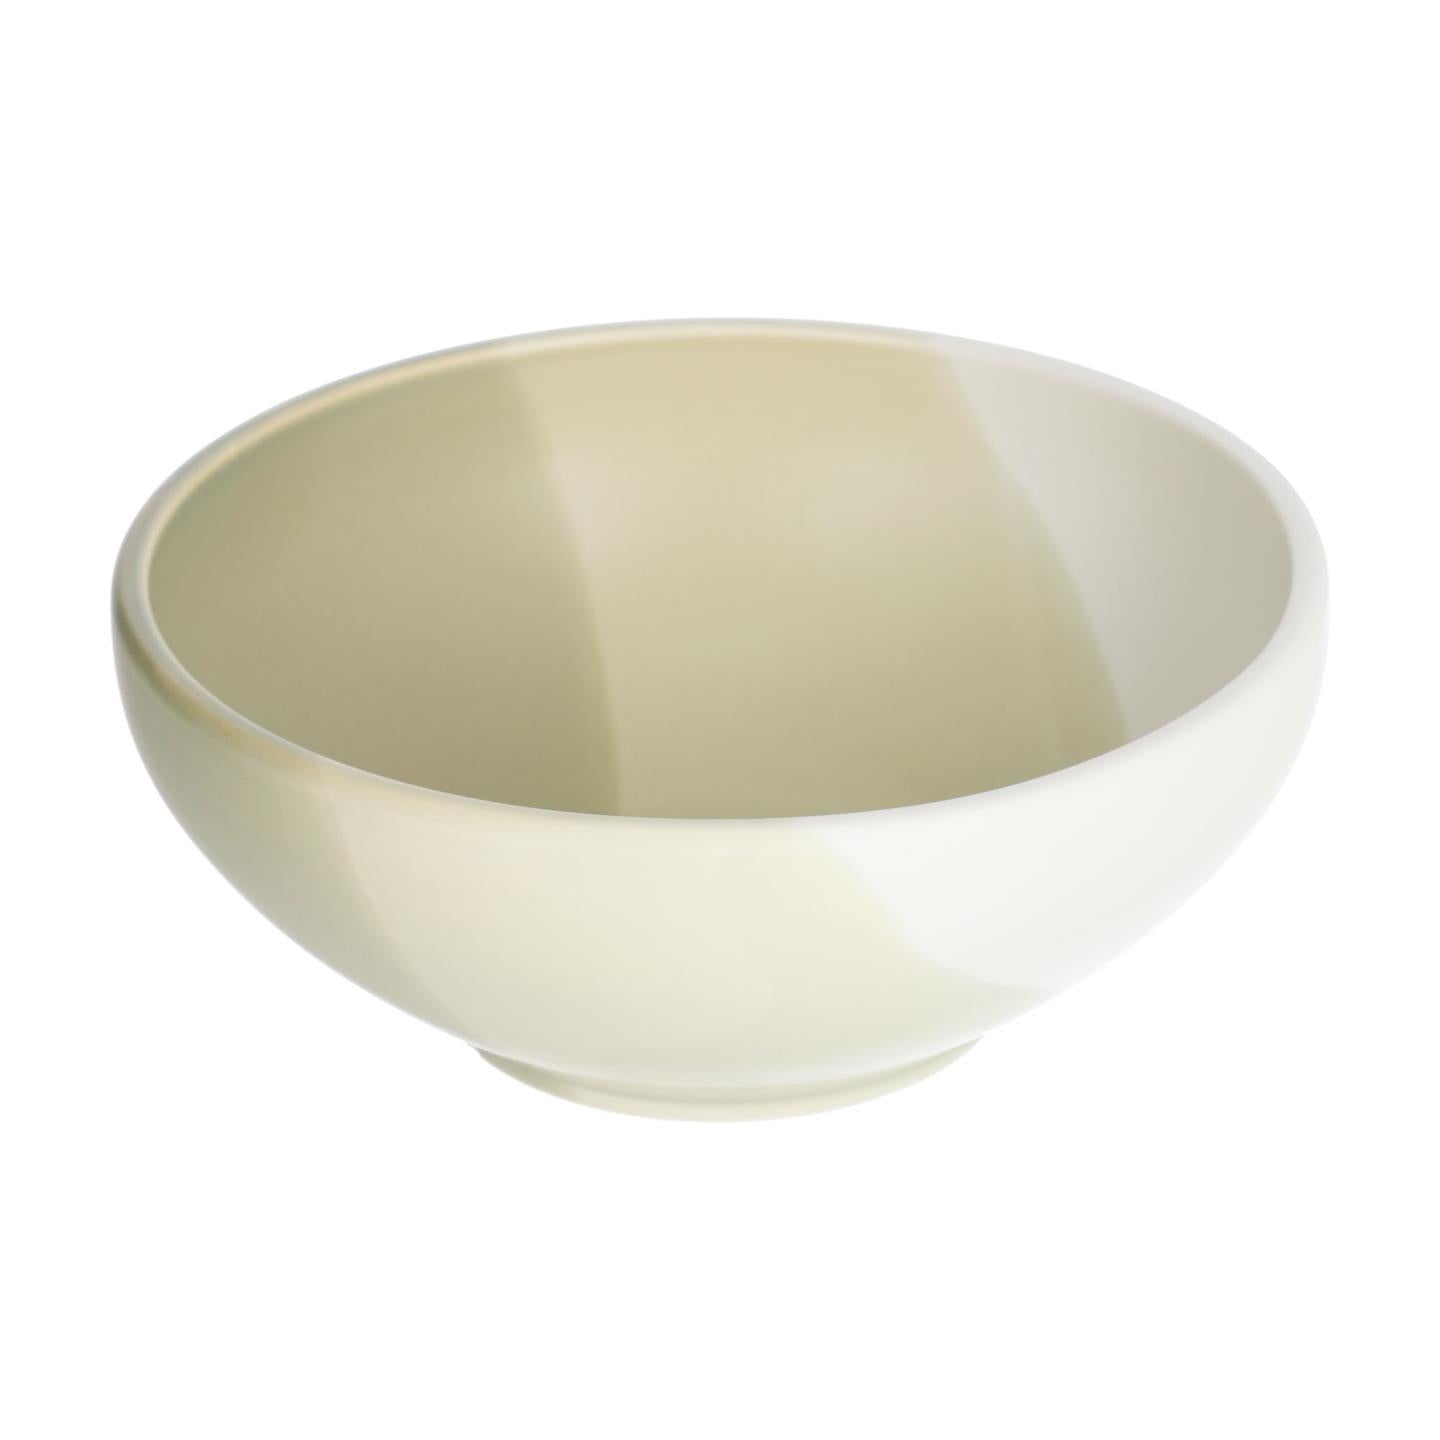 Sayuri large porcelain bowl in green and white